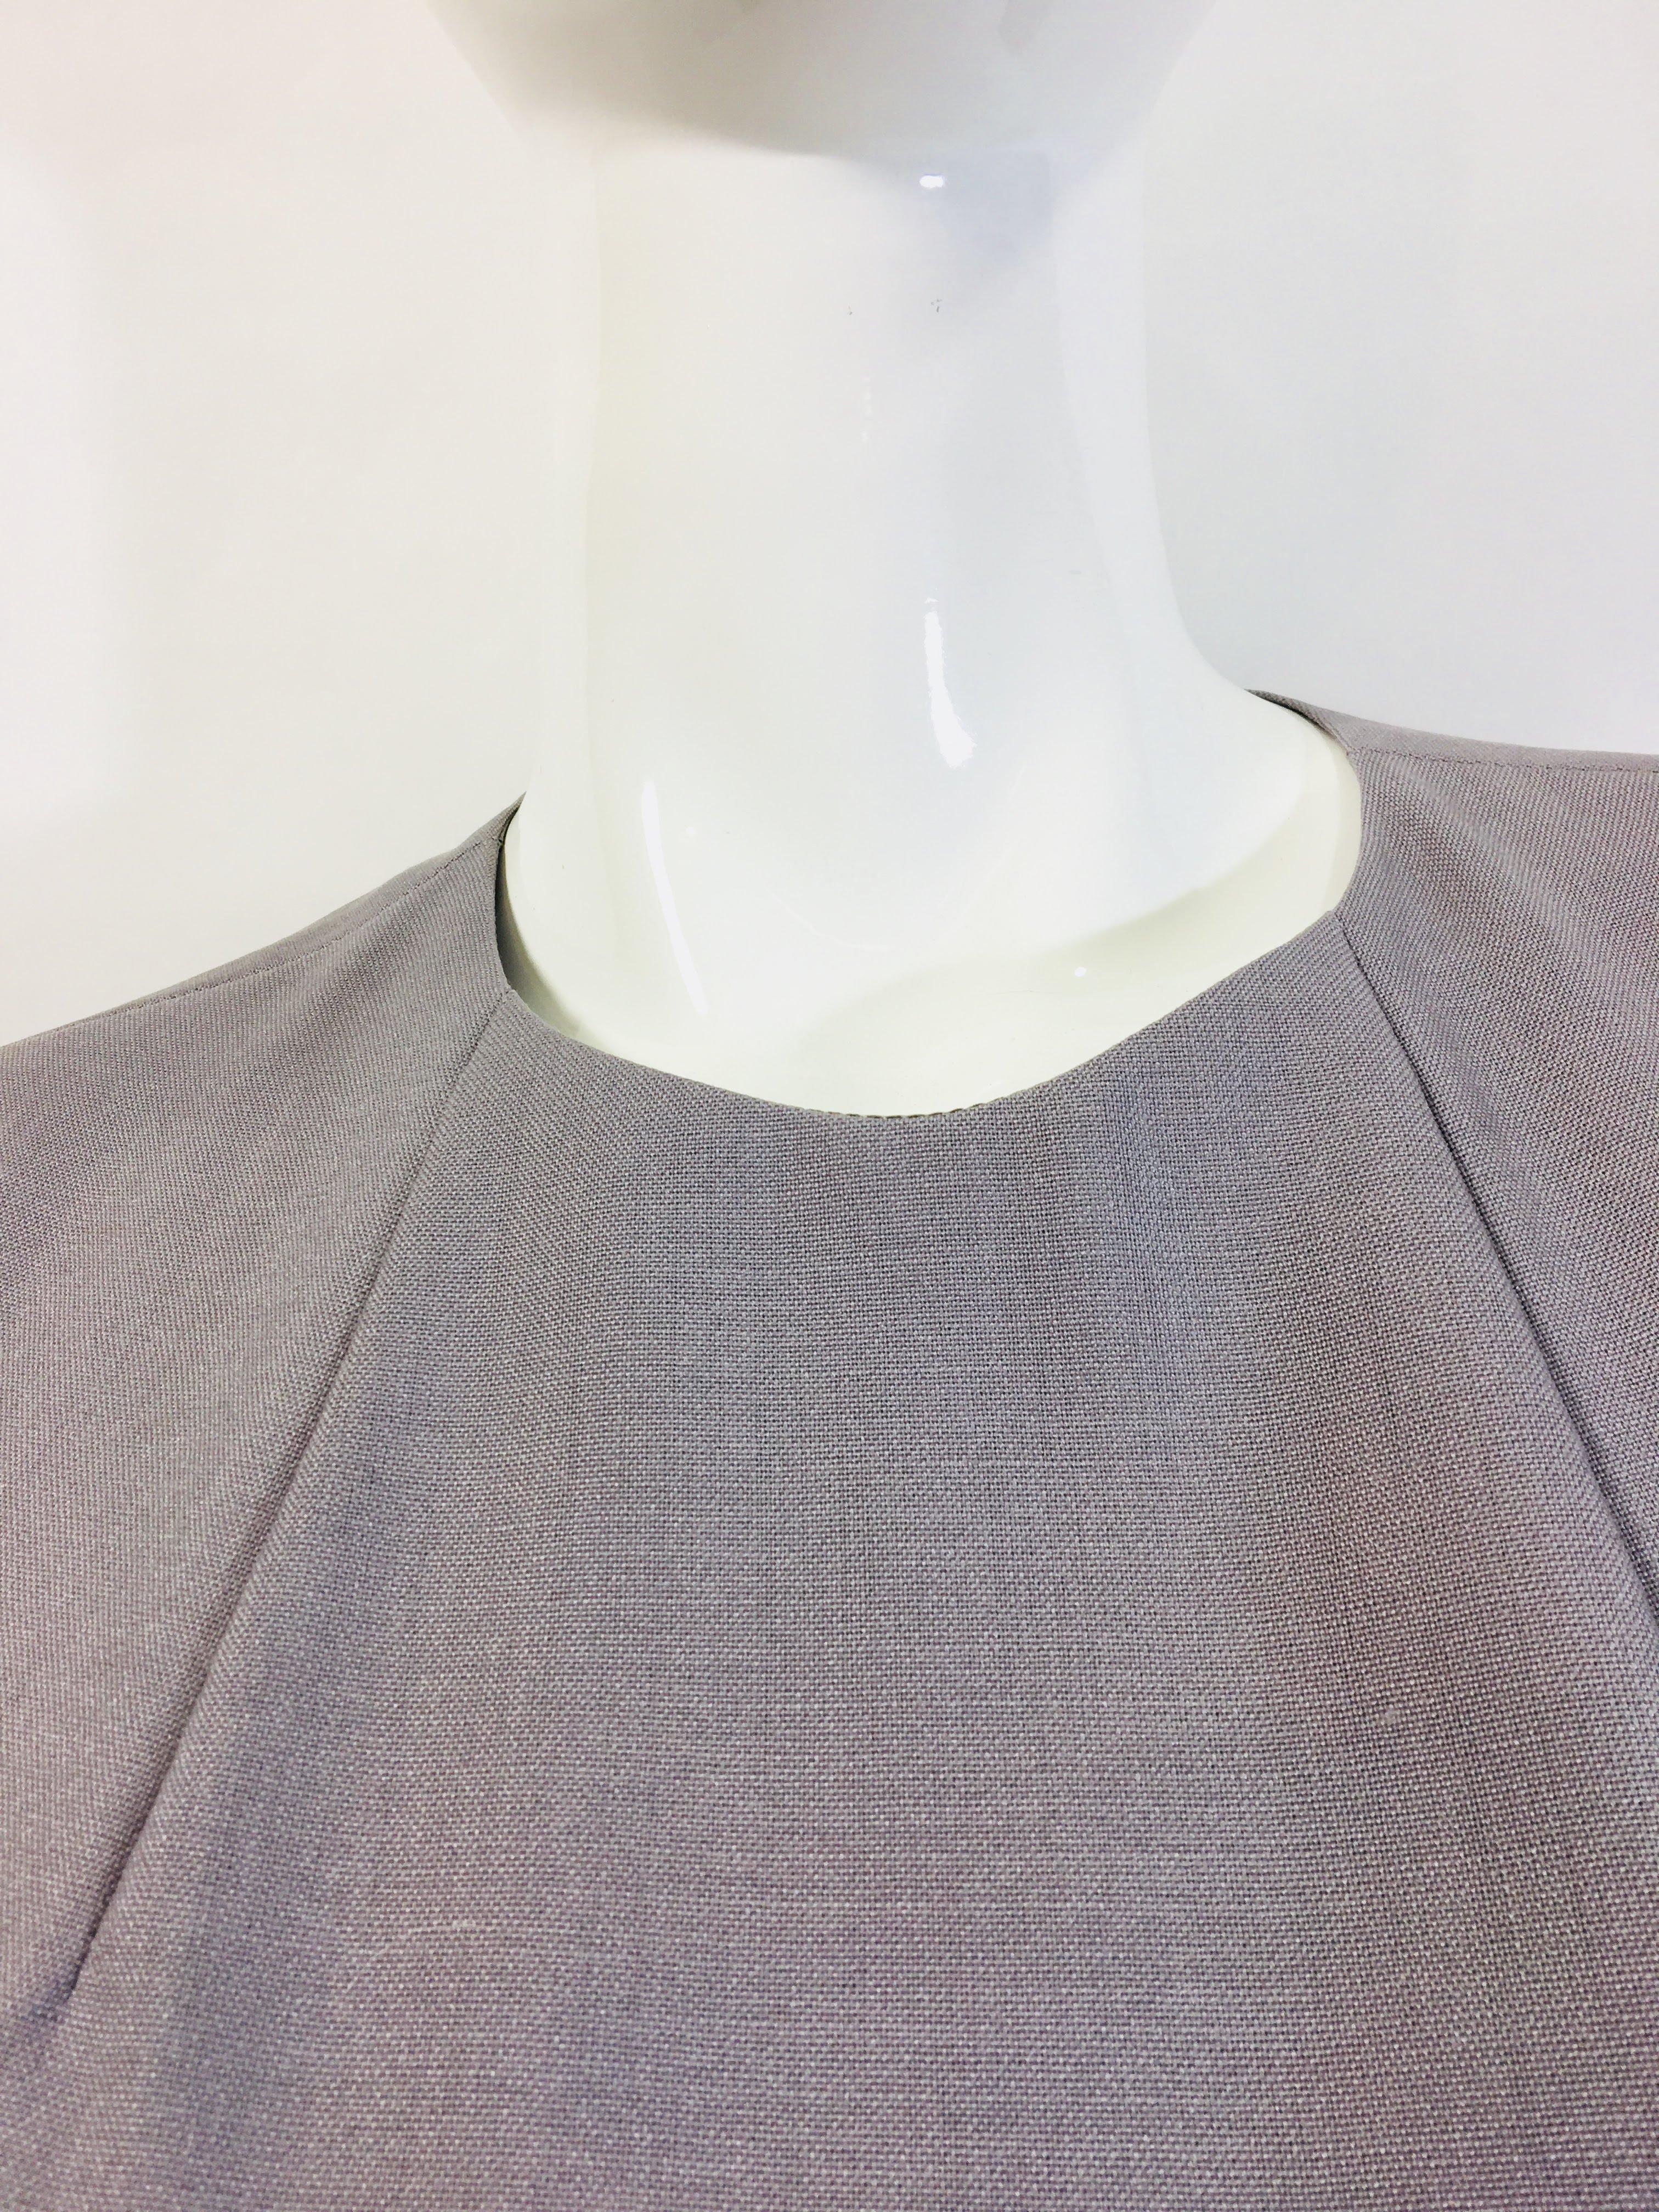 Yves Saint Laurent Gray Long Sleeve Wool Jumpsuit with Zipper Closure
Size 34